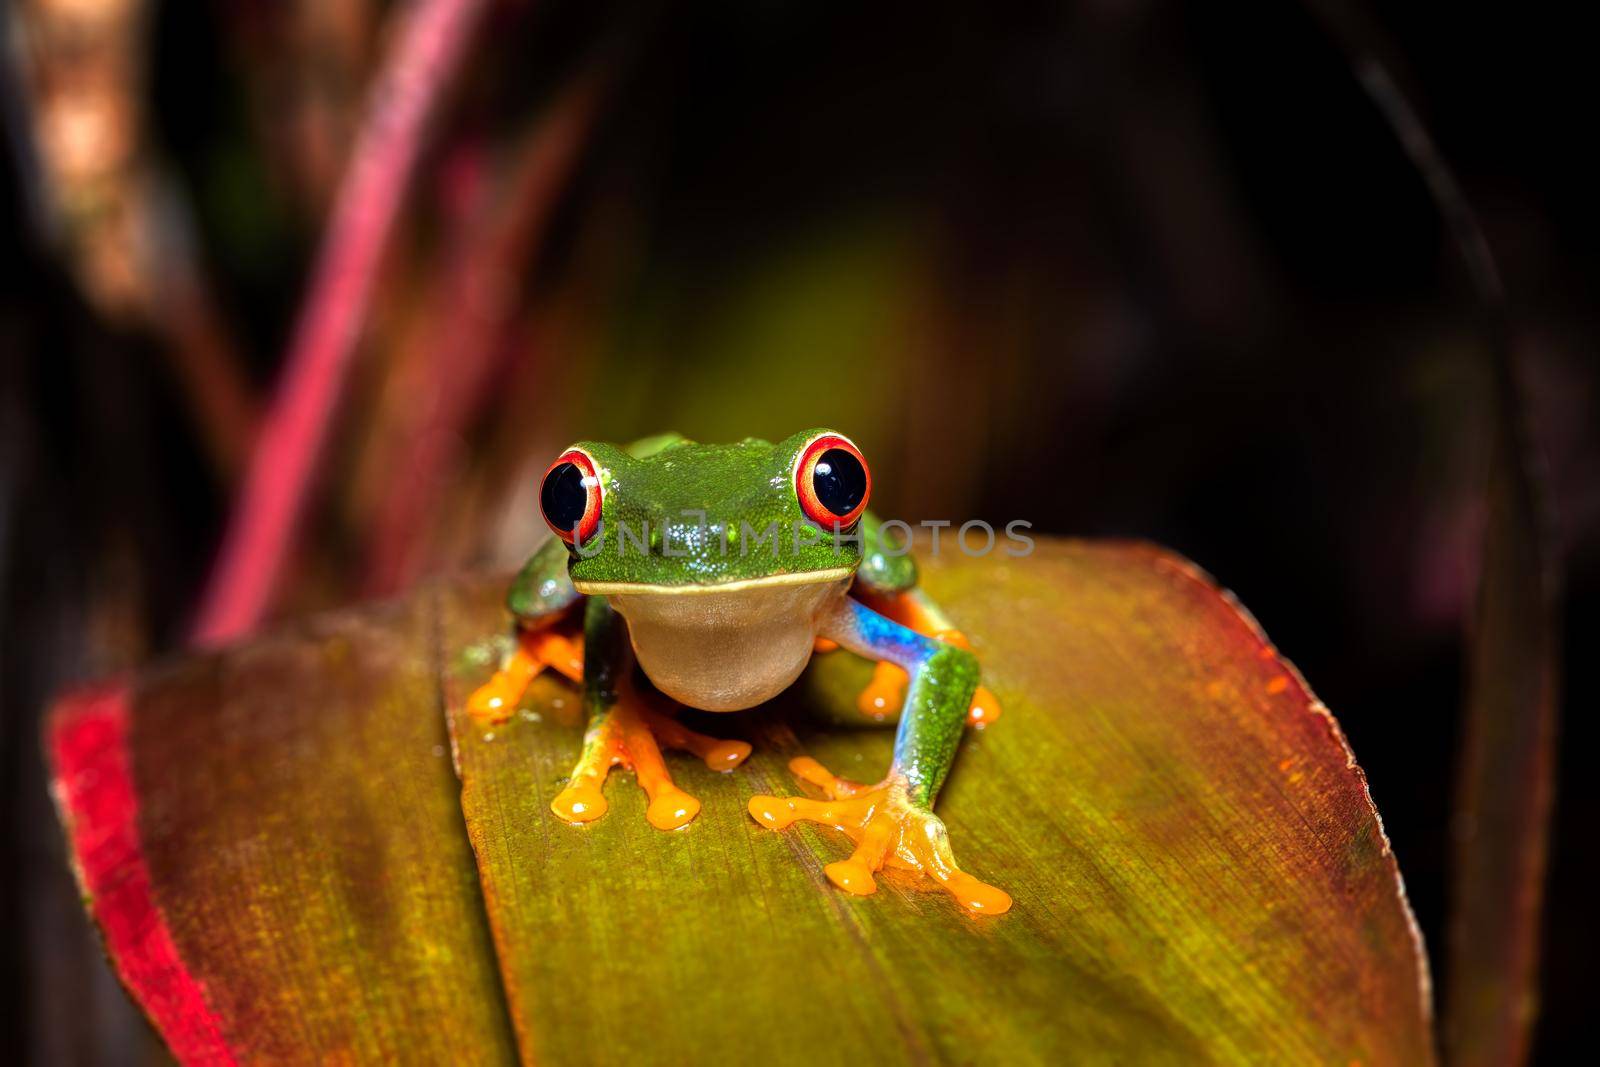 Red-eyed tree frog (Agalychnis callidryas) Cano Negro, Costa Rica wildlife by artush